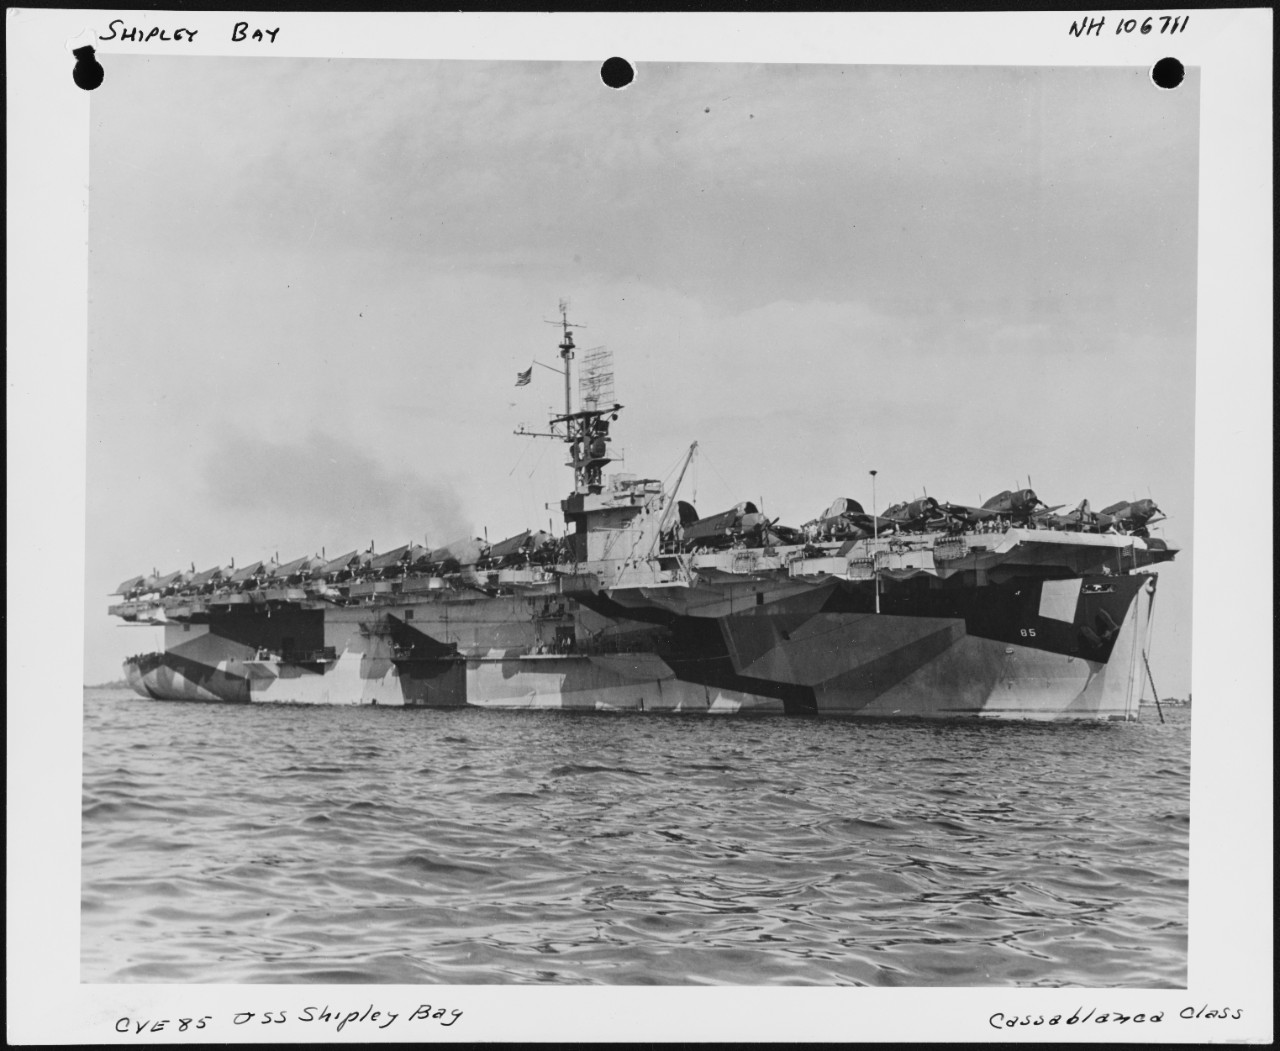 Photo # NH 106711  USS Shipley Bay